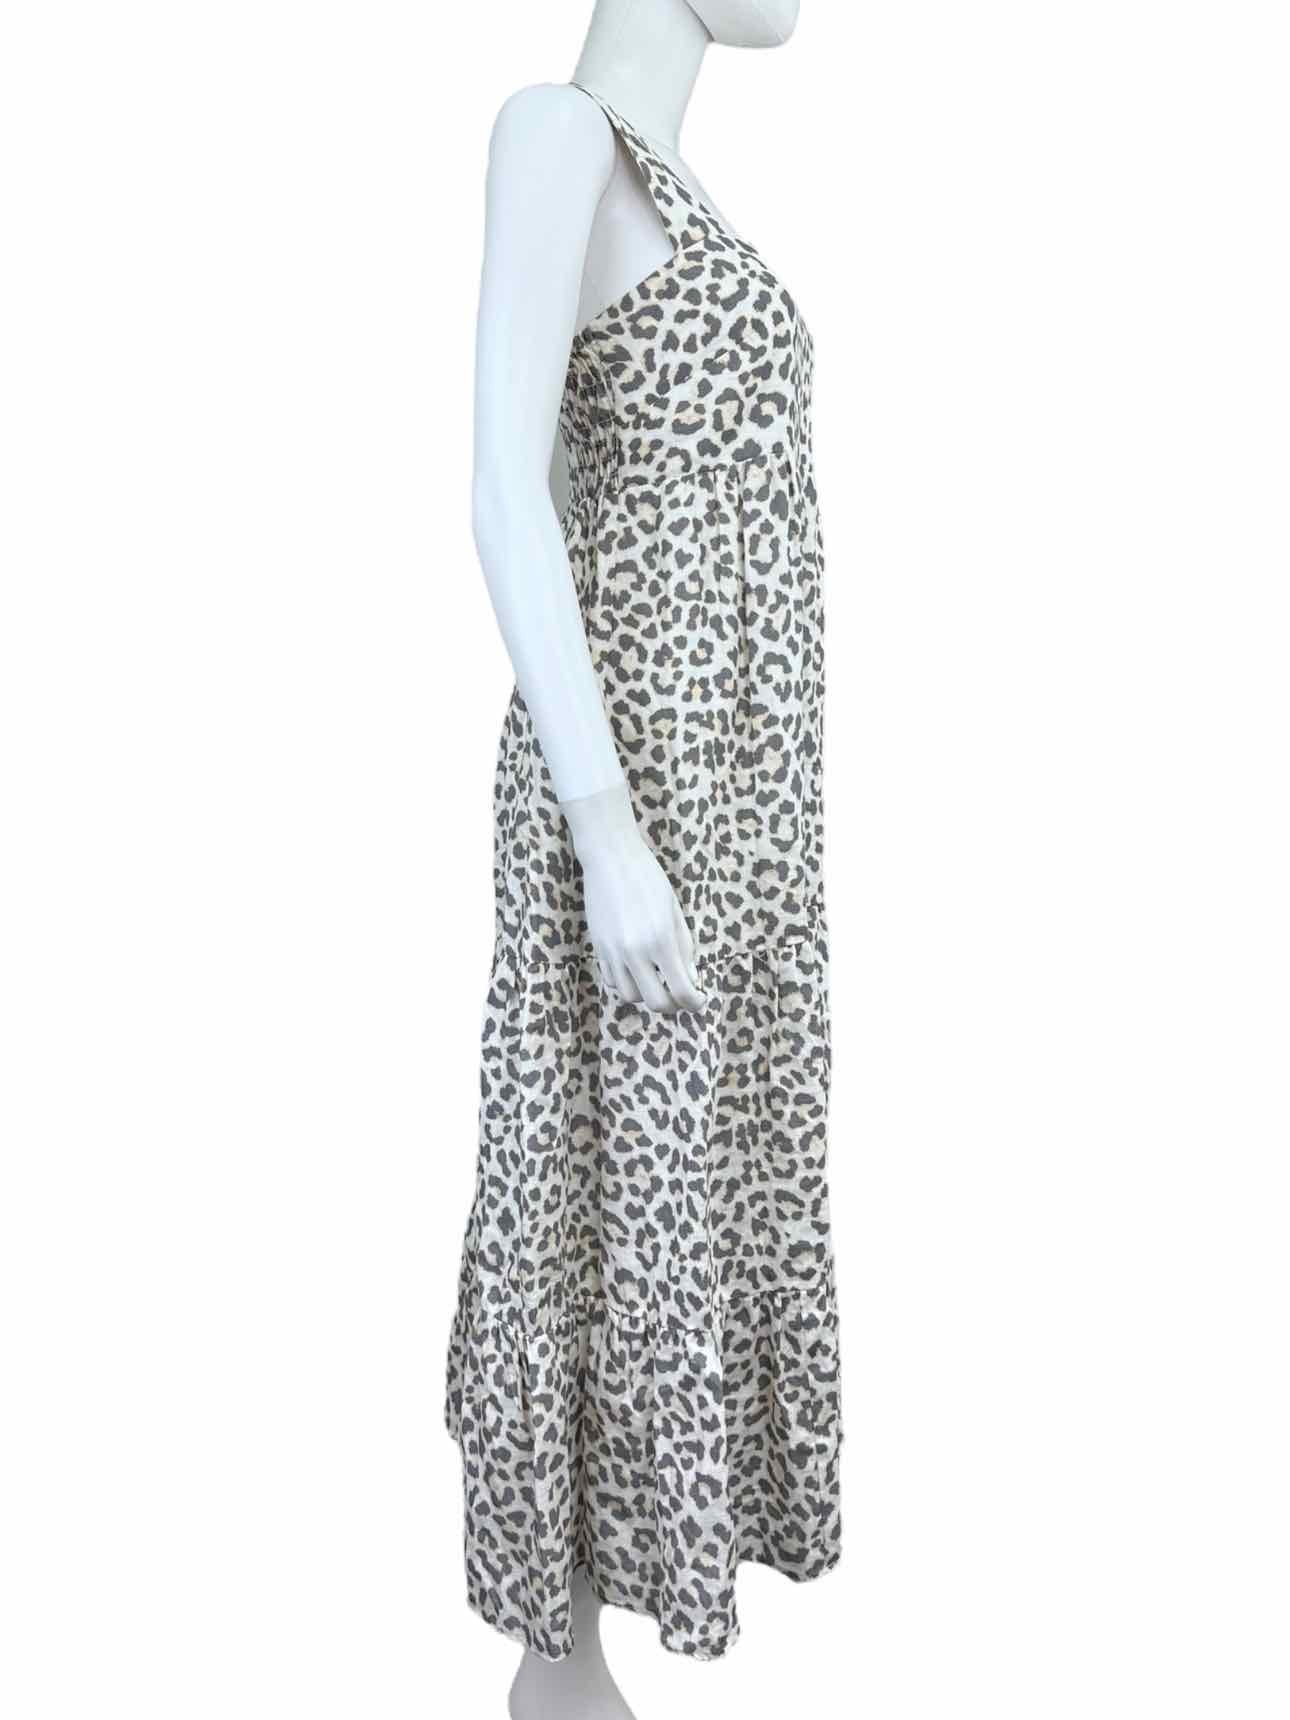 LAVENDER BROWN Leopard Print Linen Sundress Size S